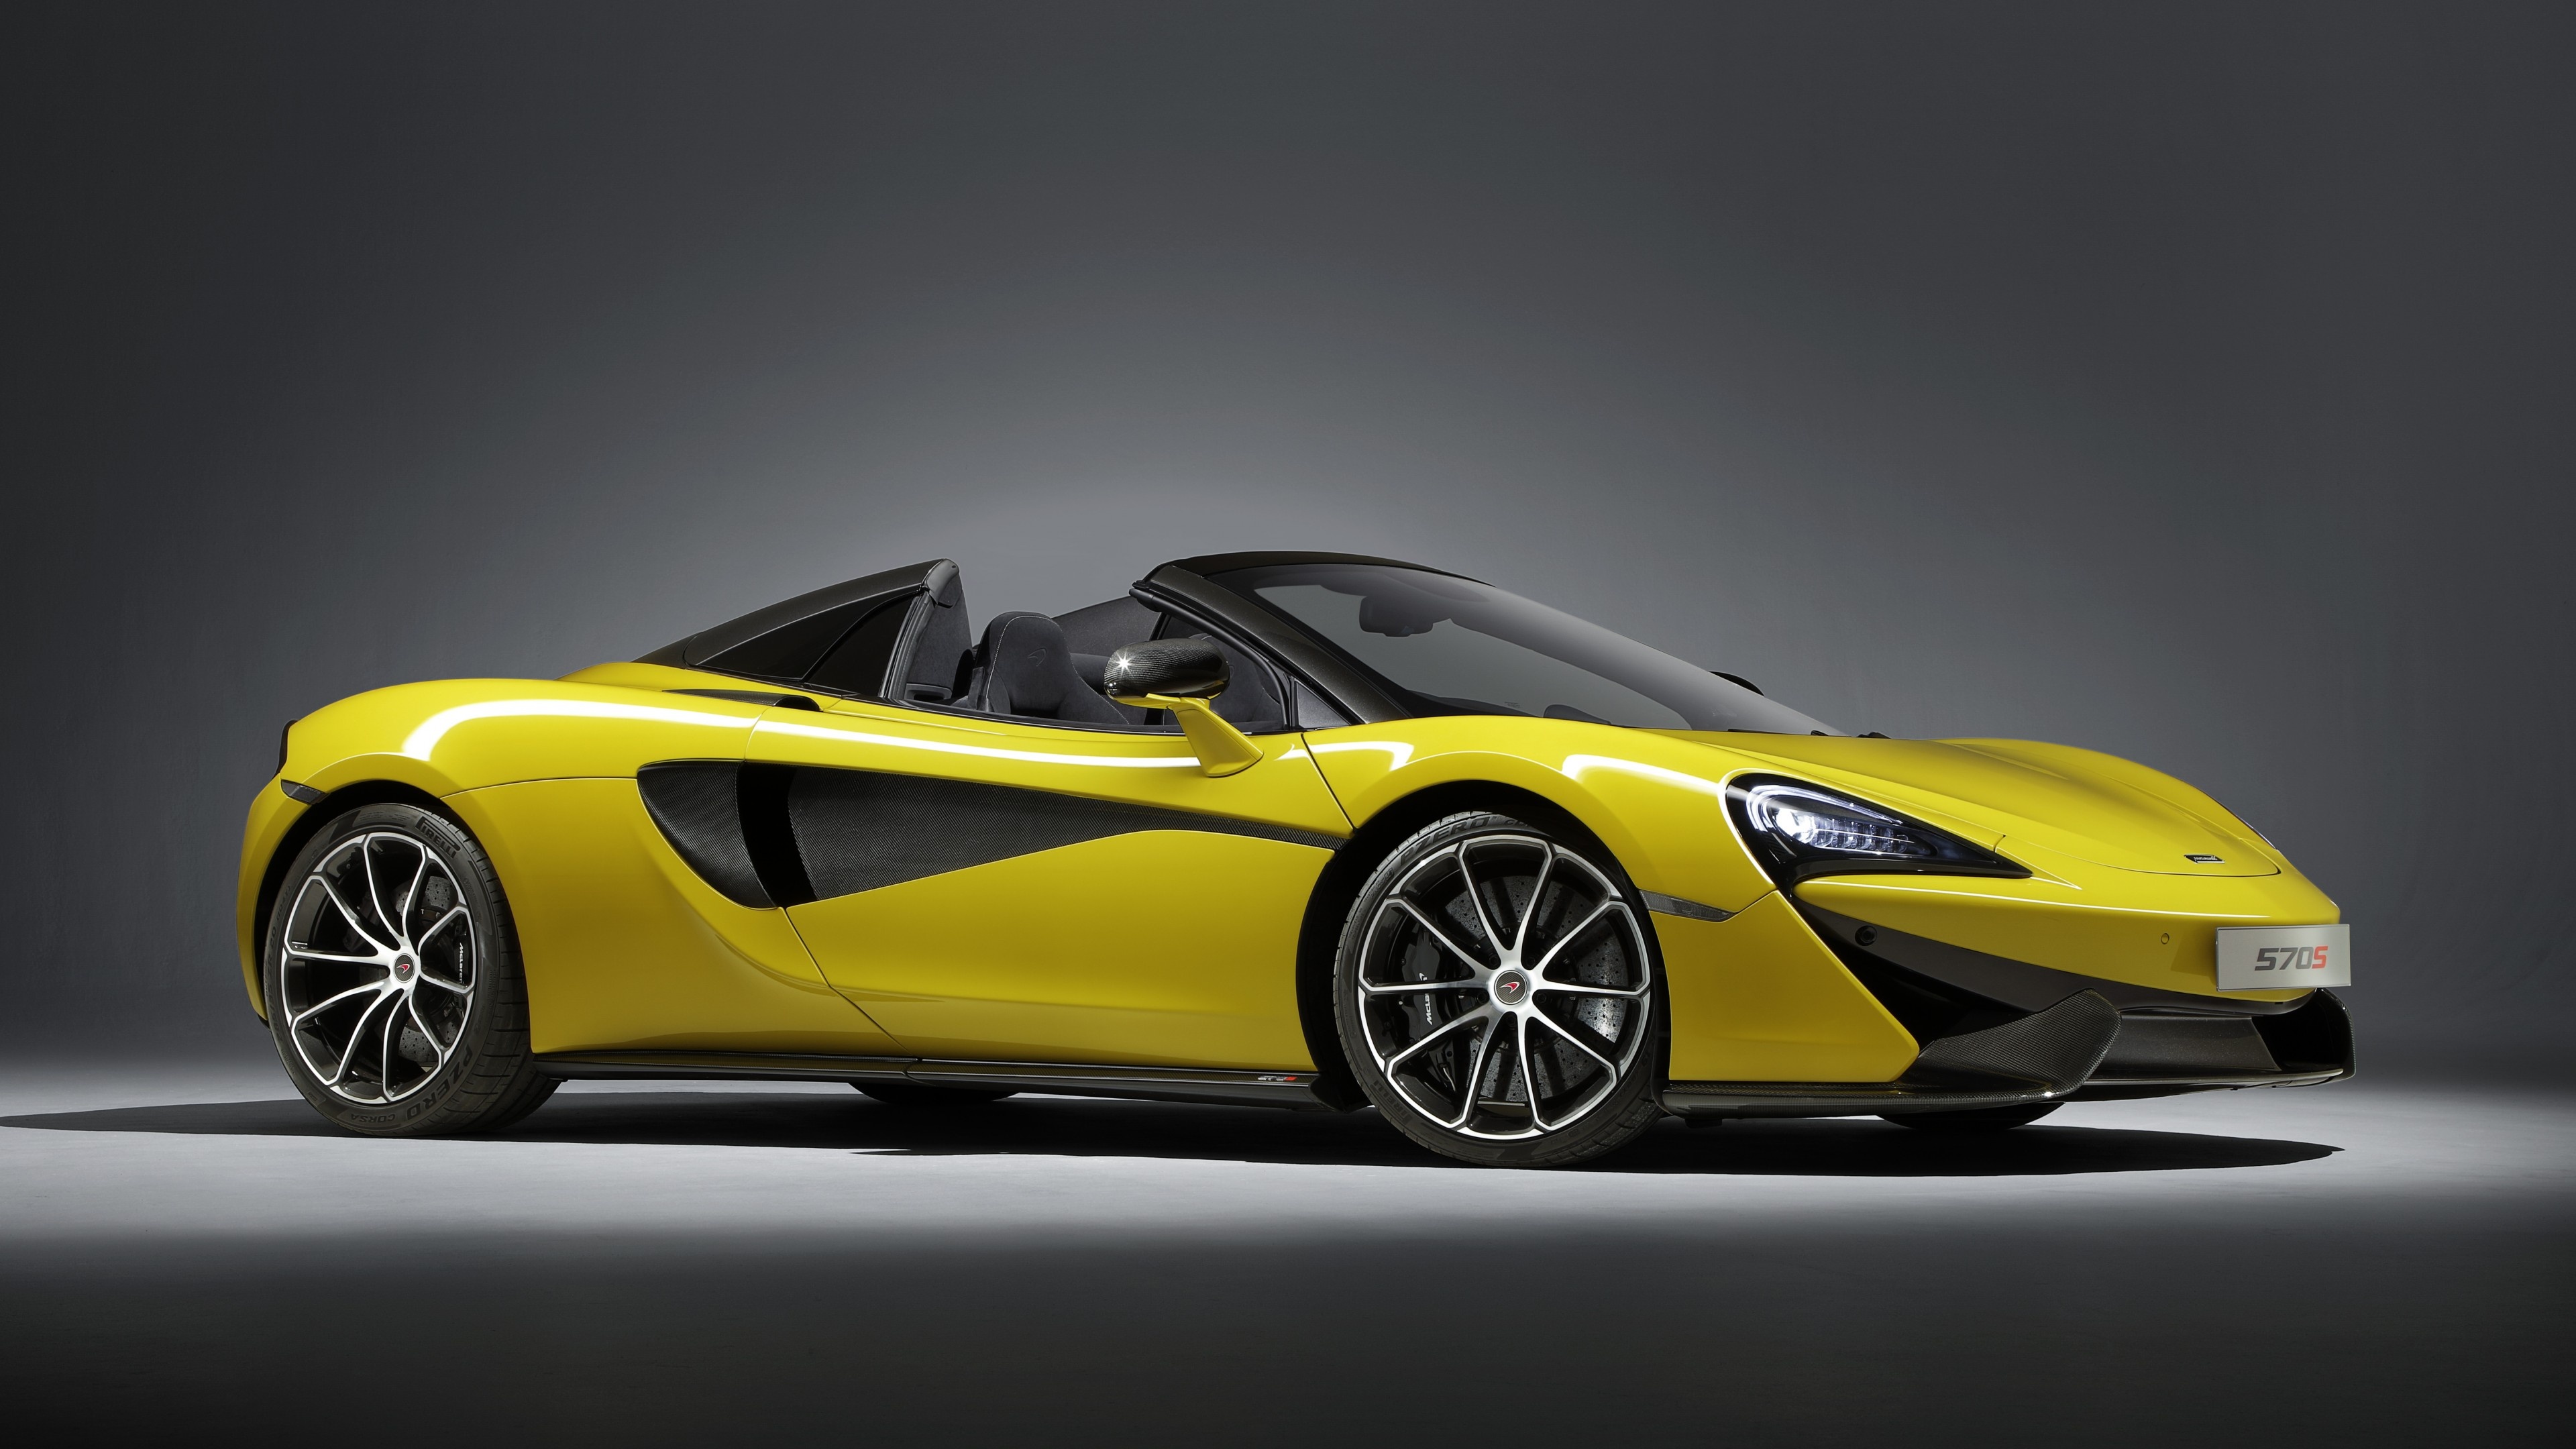 McLaren 570S, Striking yellow beauty, HD wallpapers, Supercar speed, 3840x2160 4K Desktop